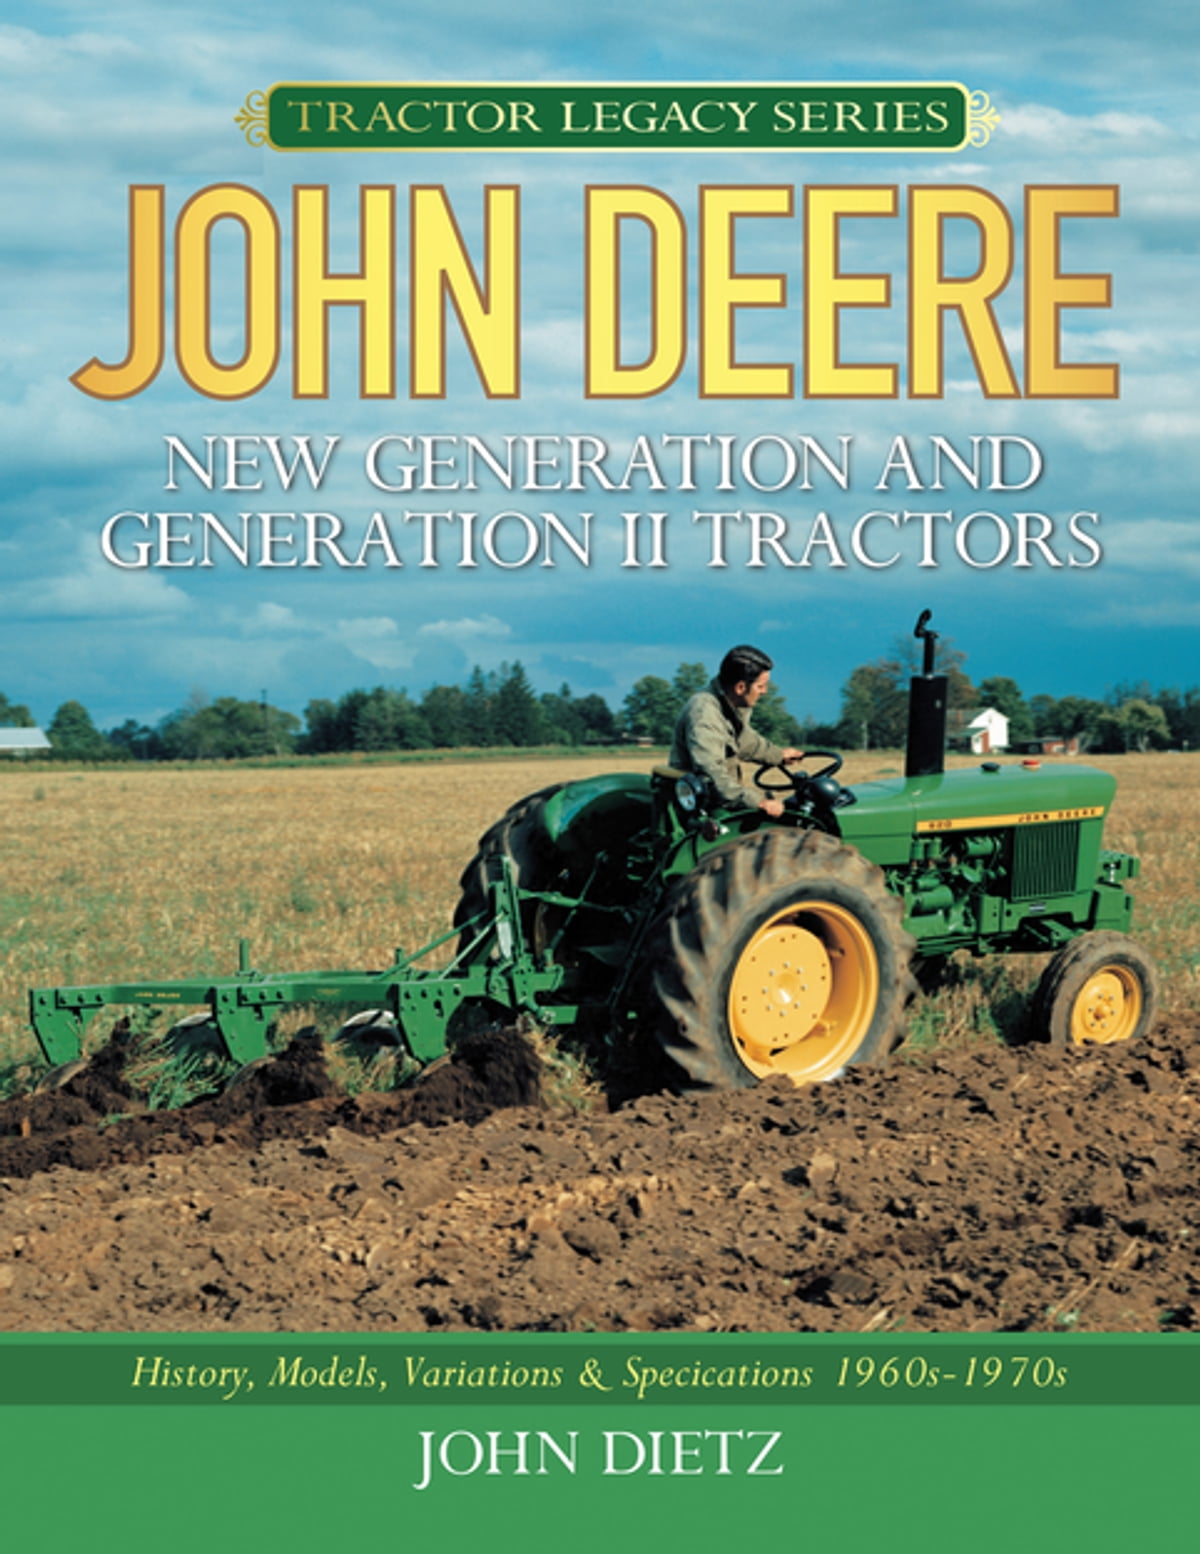 John Deere: A Legacy Spanning Generations